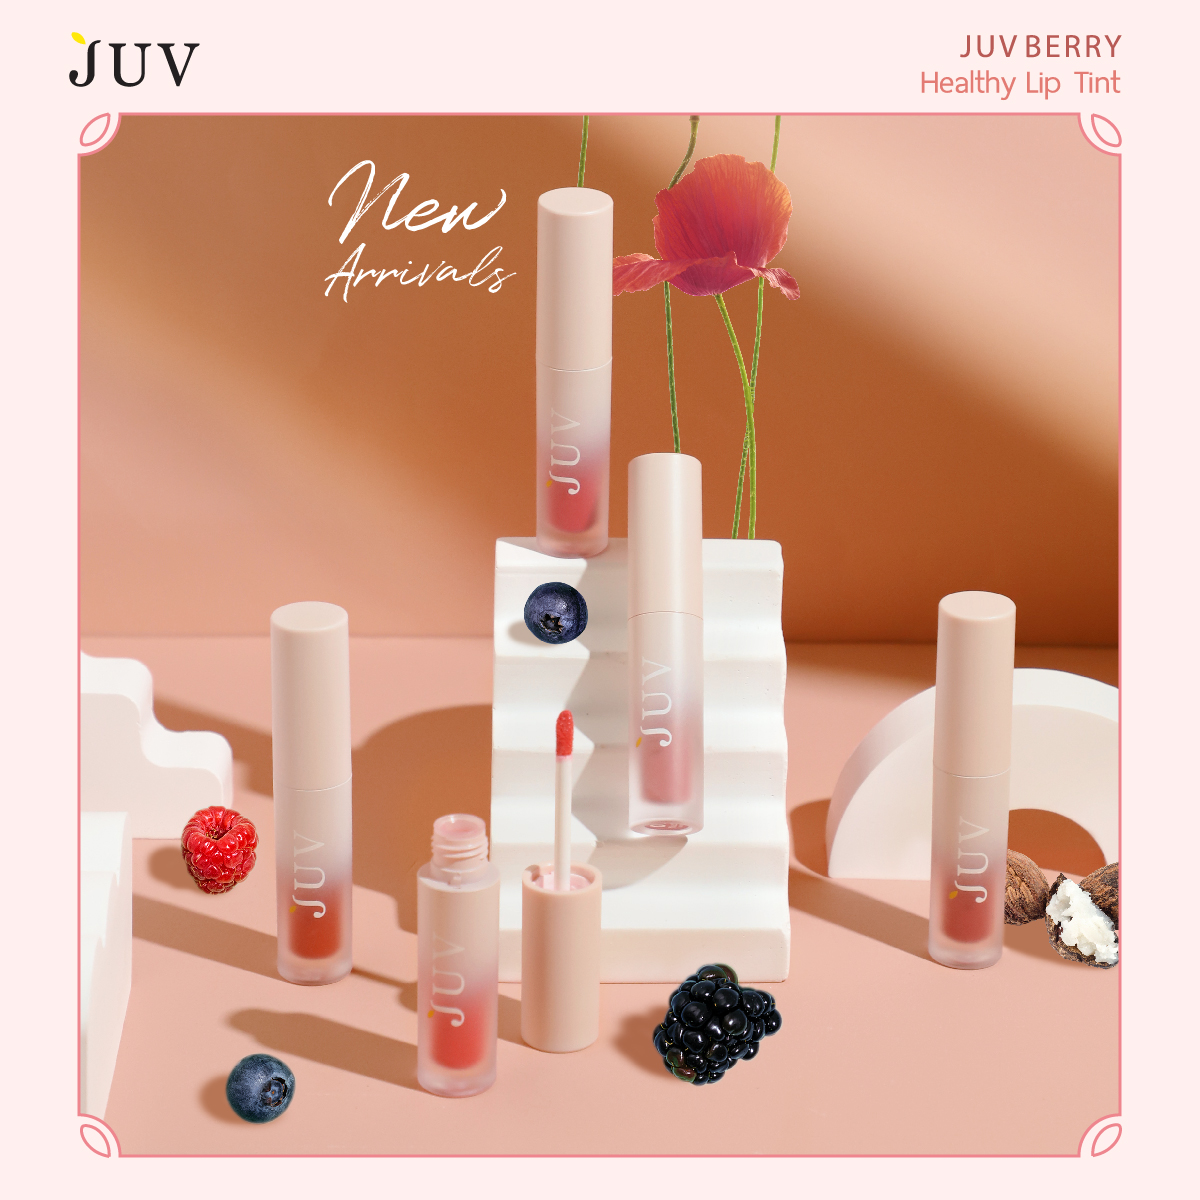 JUV Berry Glowy Matte Tint (Garnet)